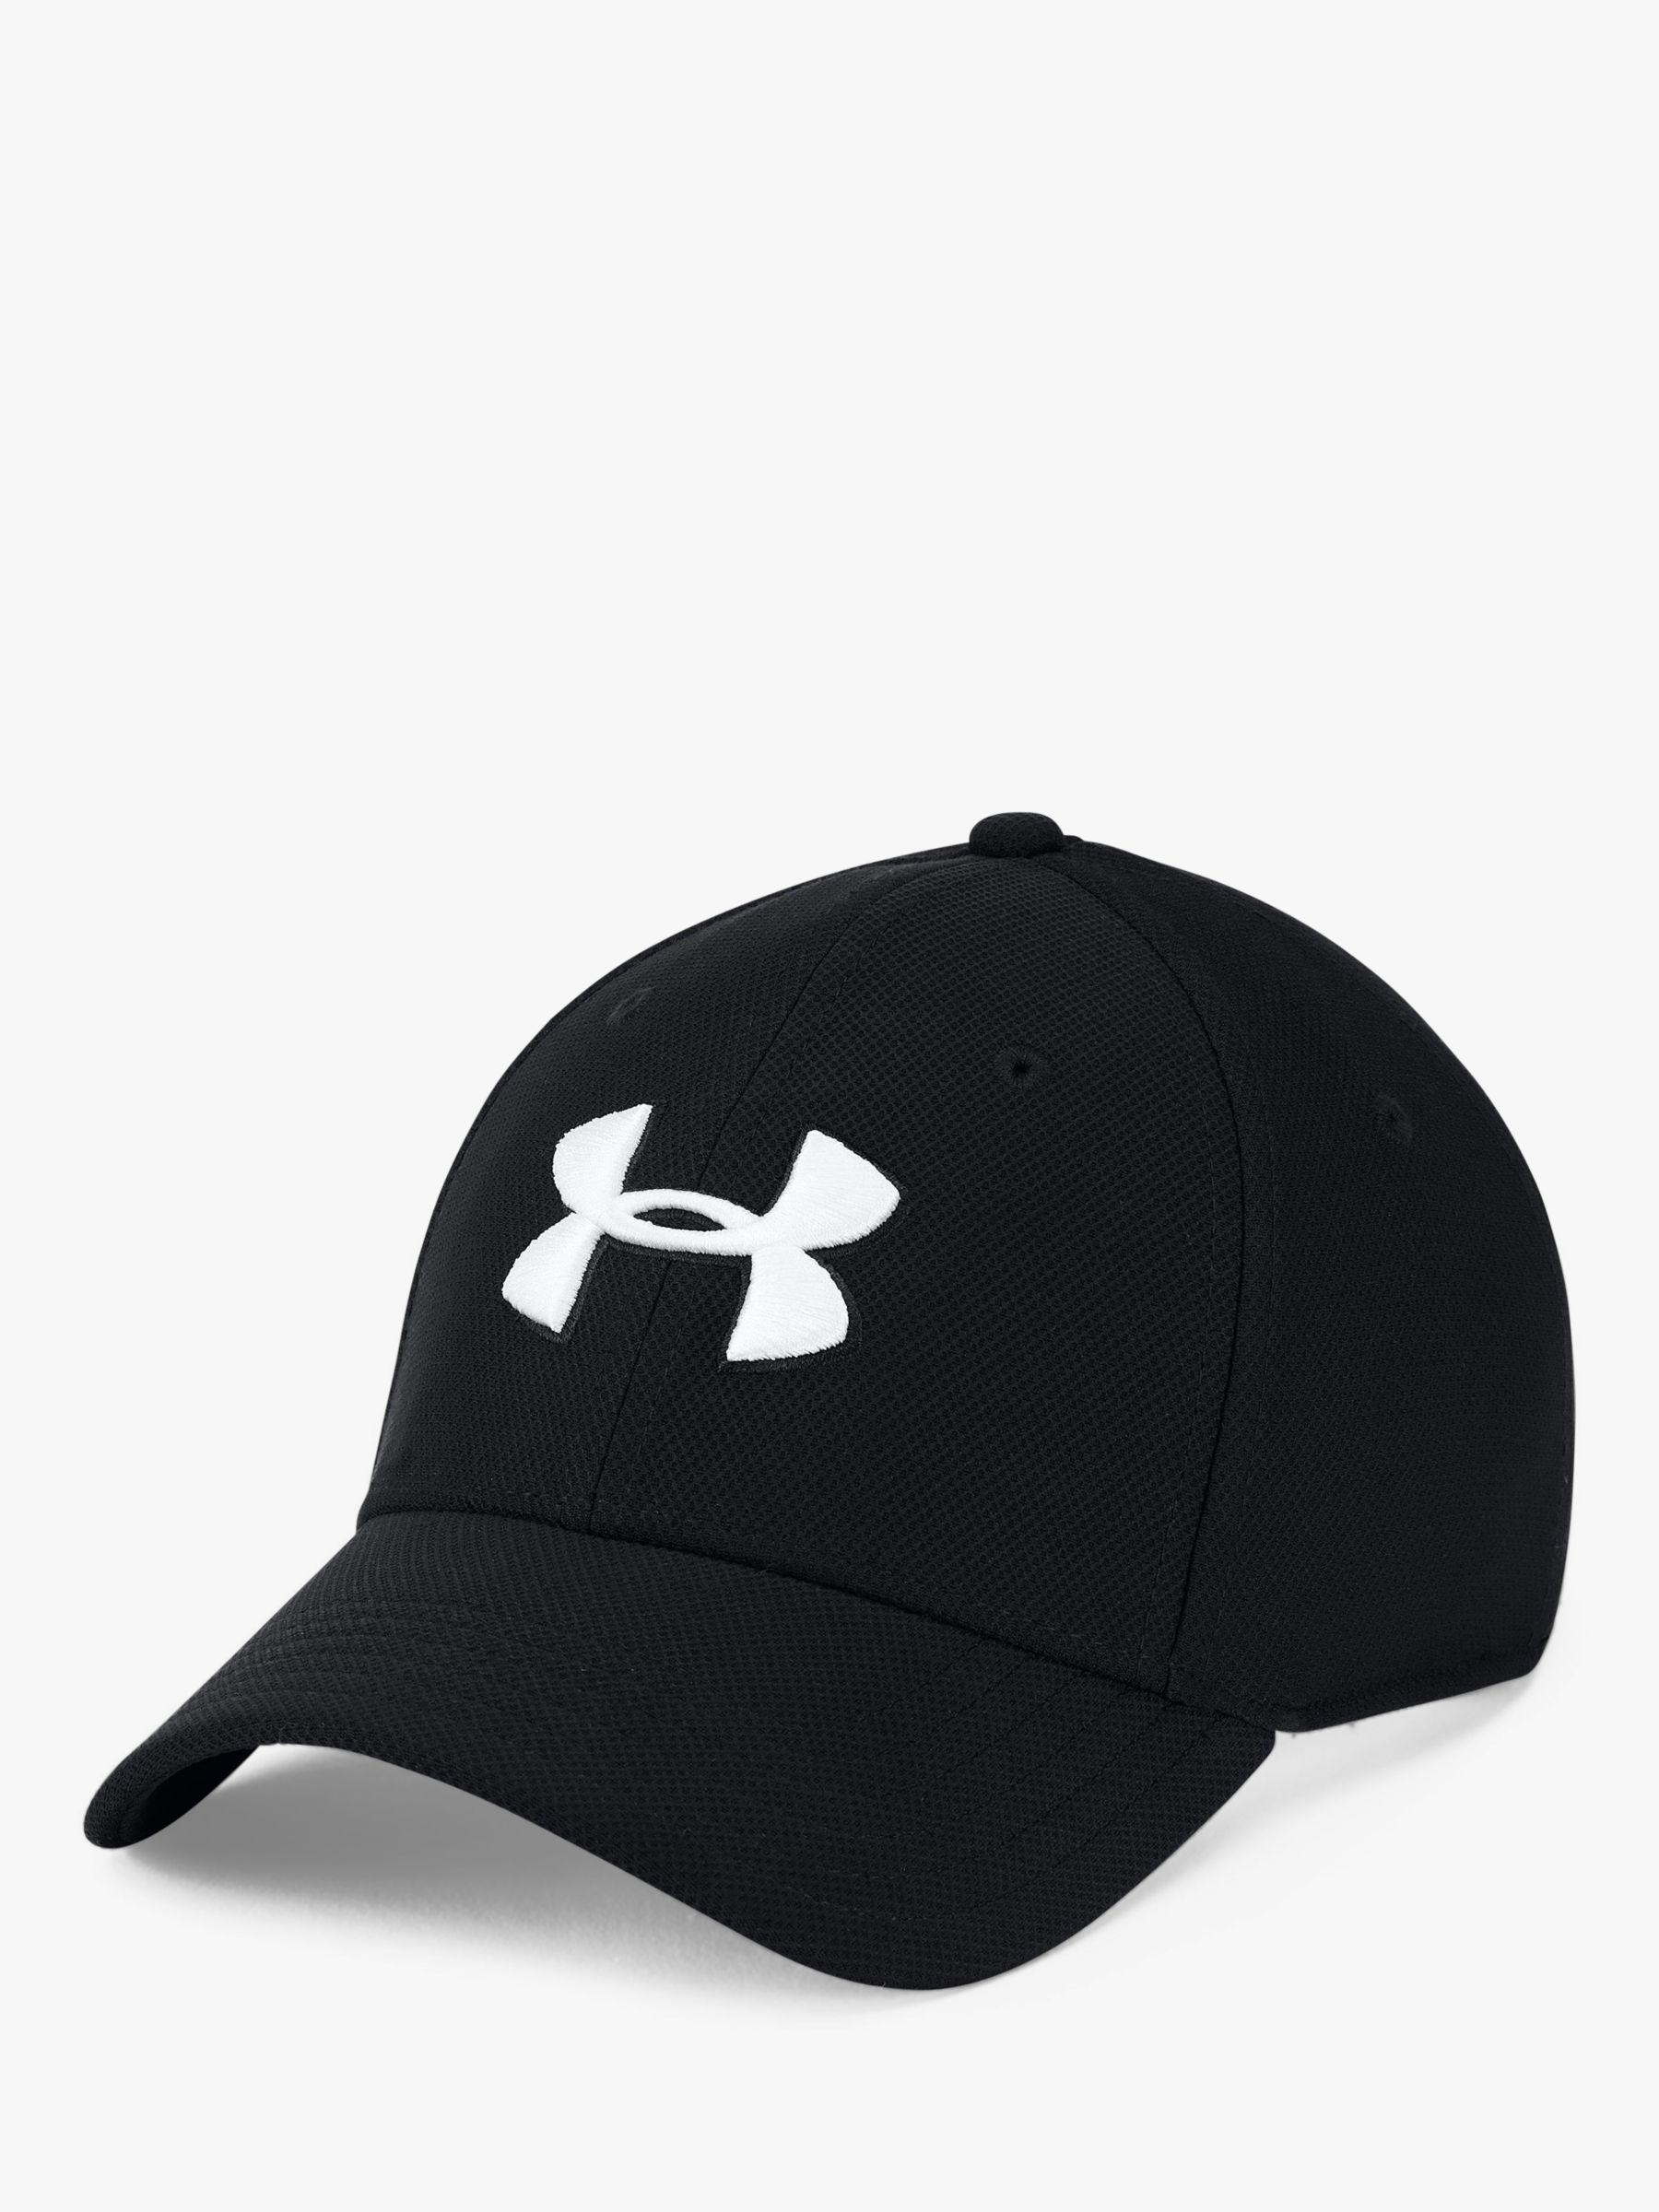 under armor baseball cap